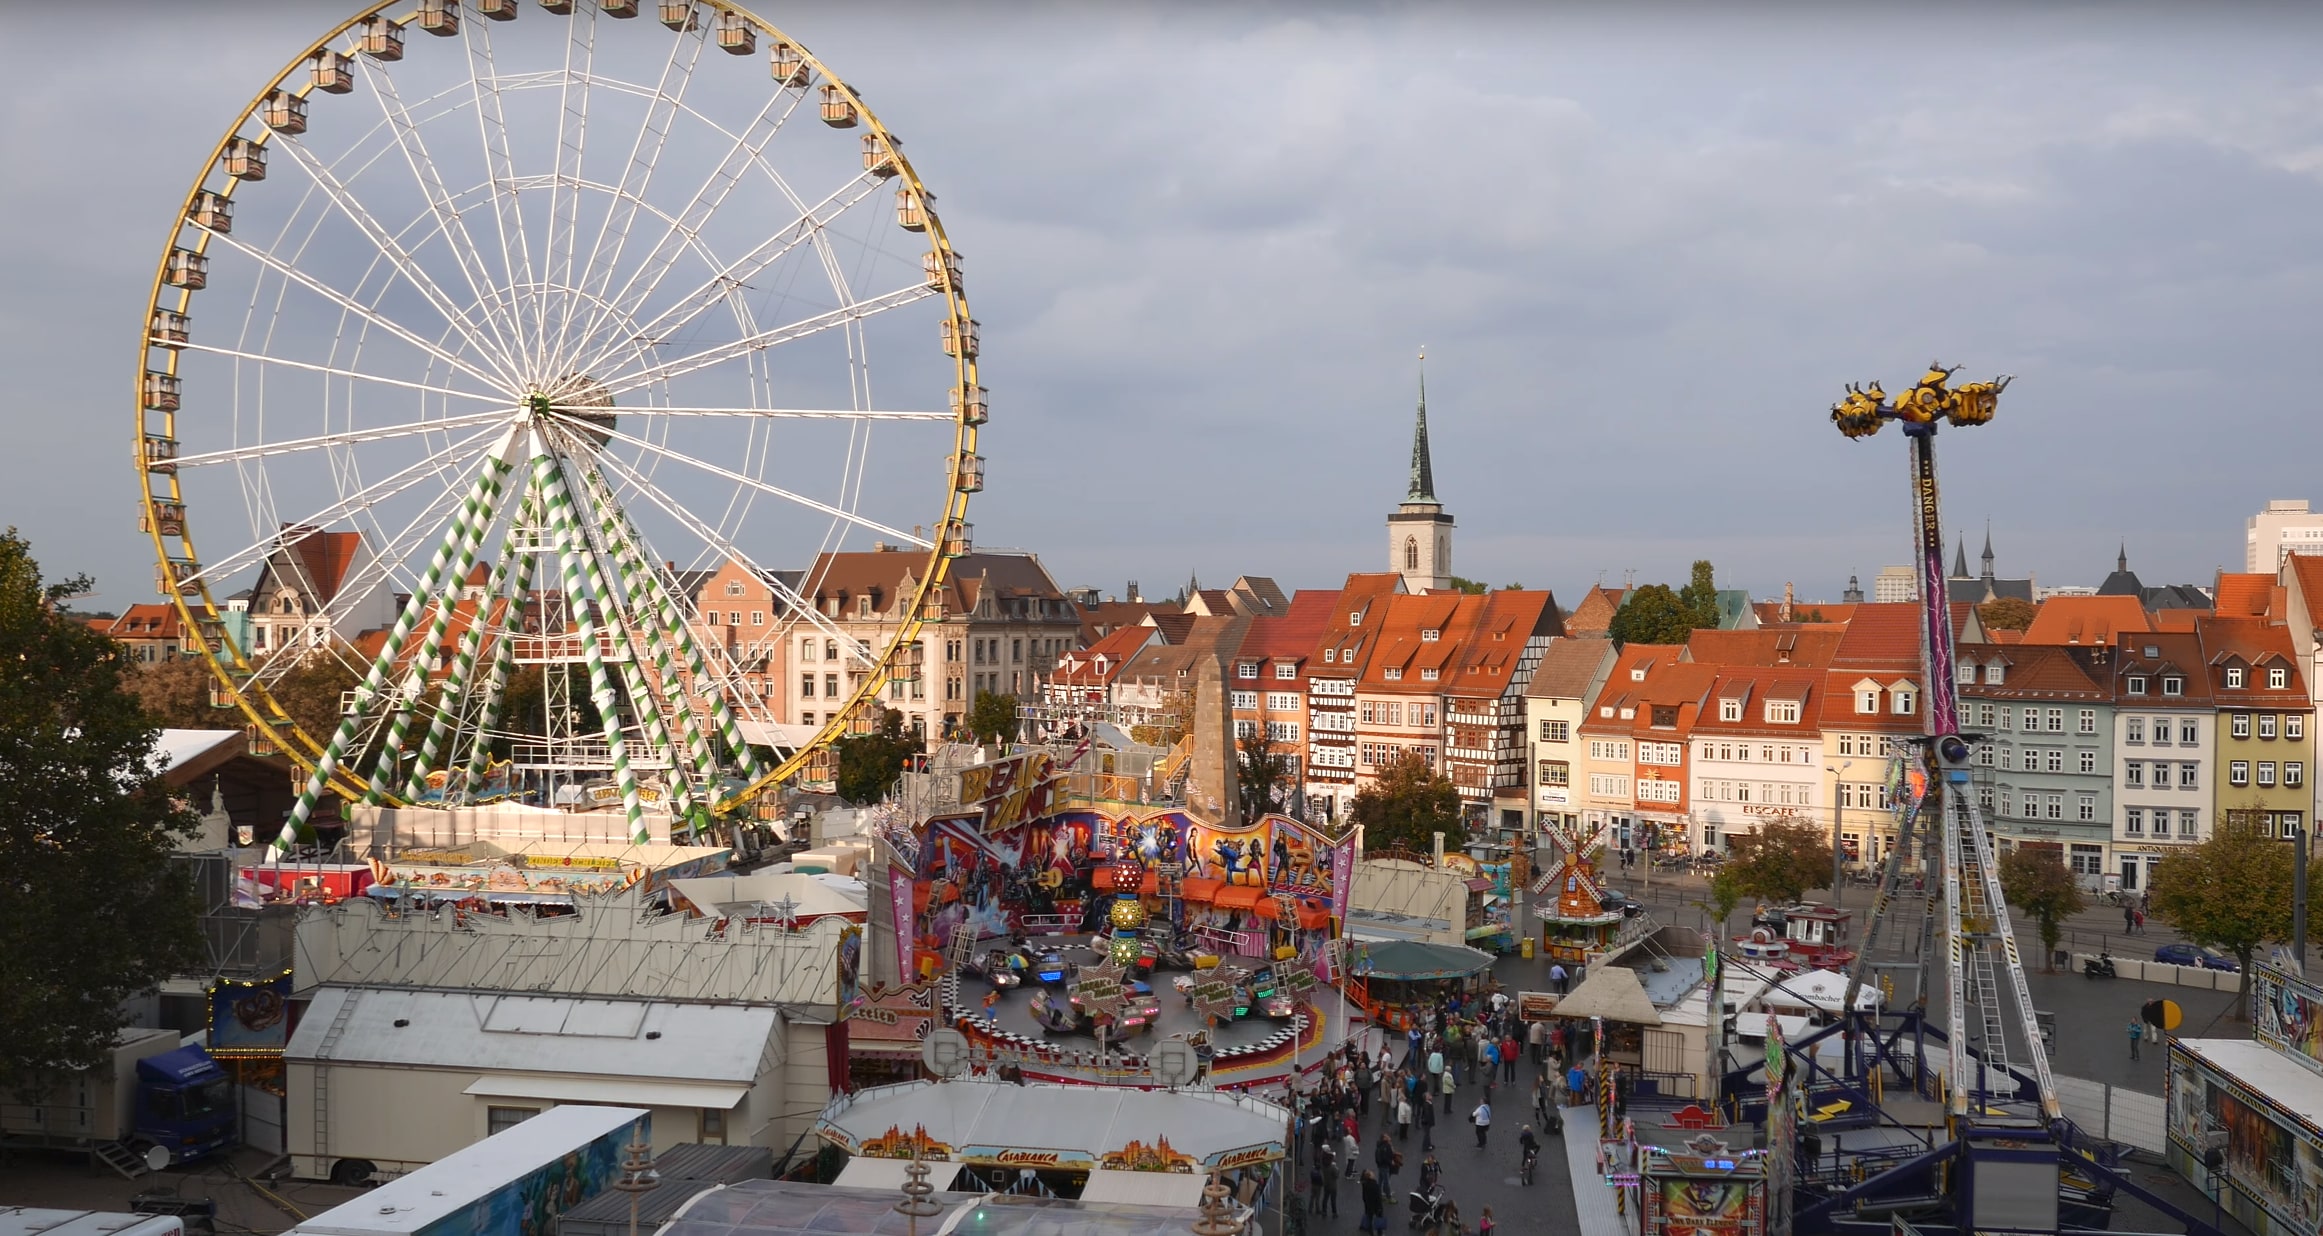 Oktoberfest 20 Munich, Berlin, Frankfurt   Top 20 Cities to ...